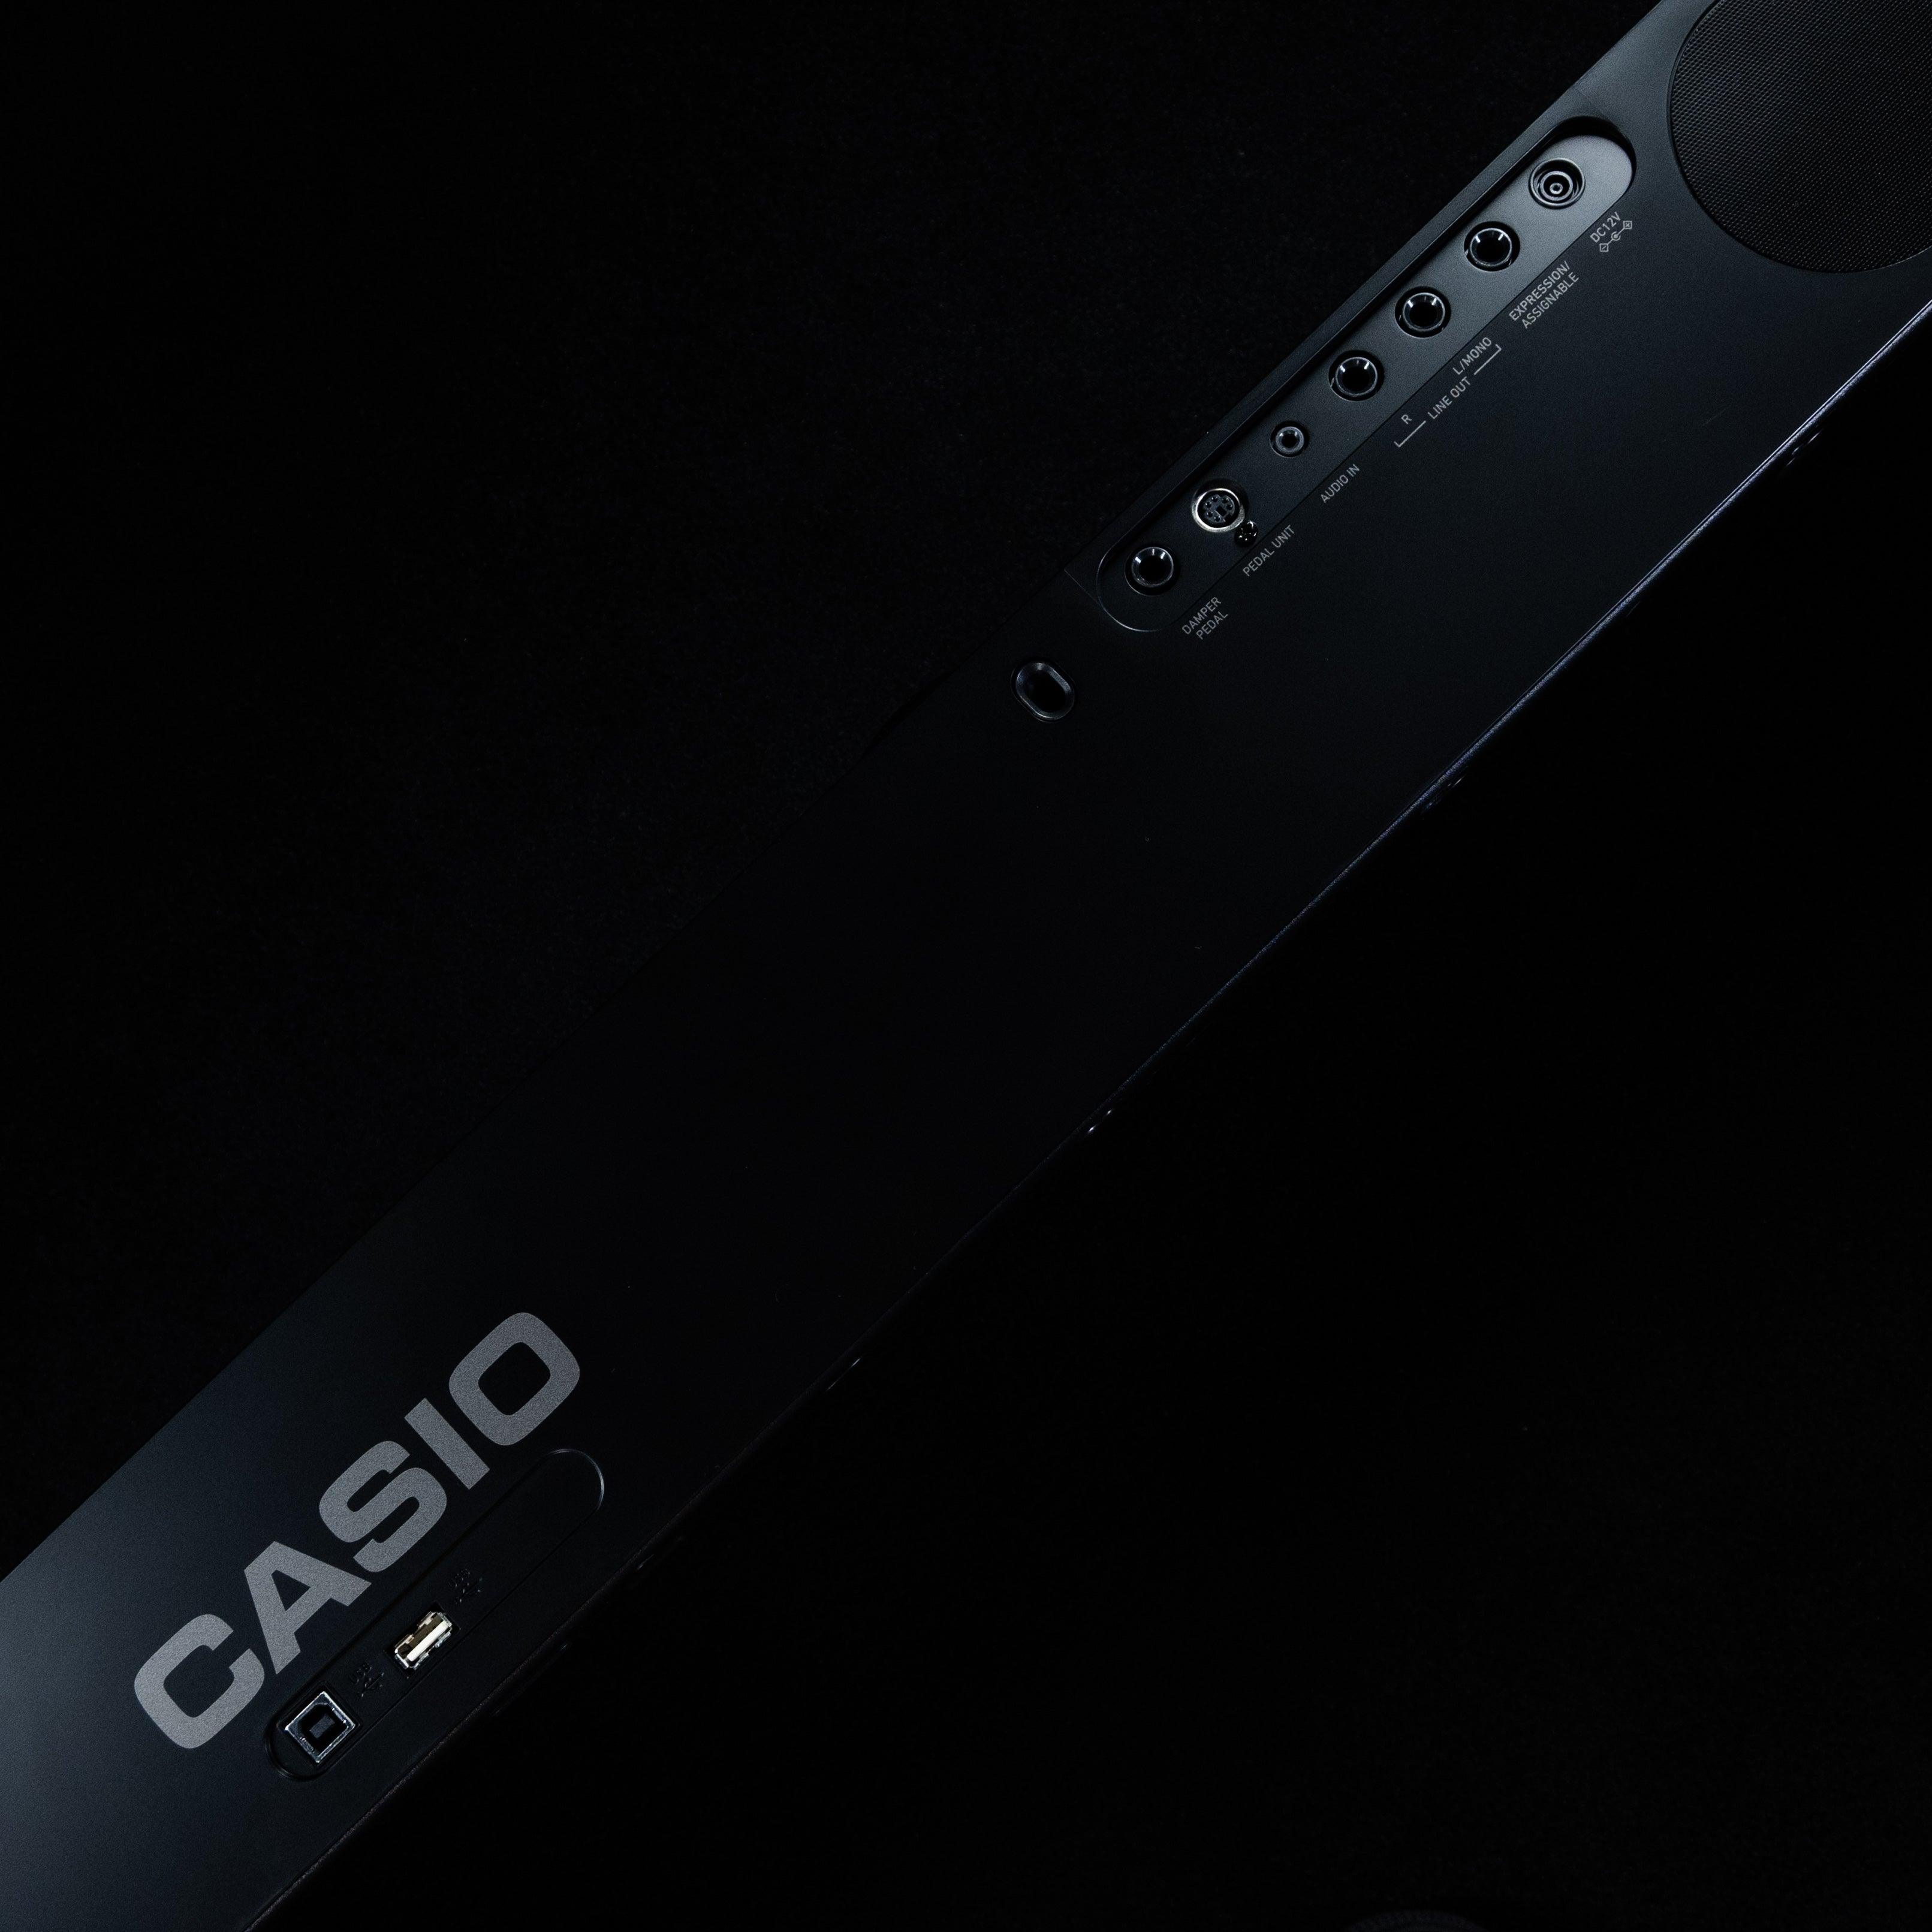 Casio PX-S3100BK 88-Key Digital Keyboard - Impulse Music Co.